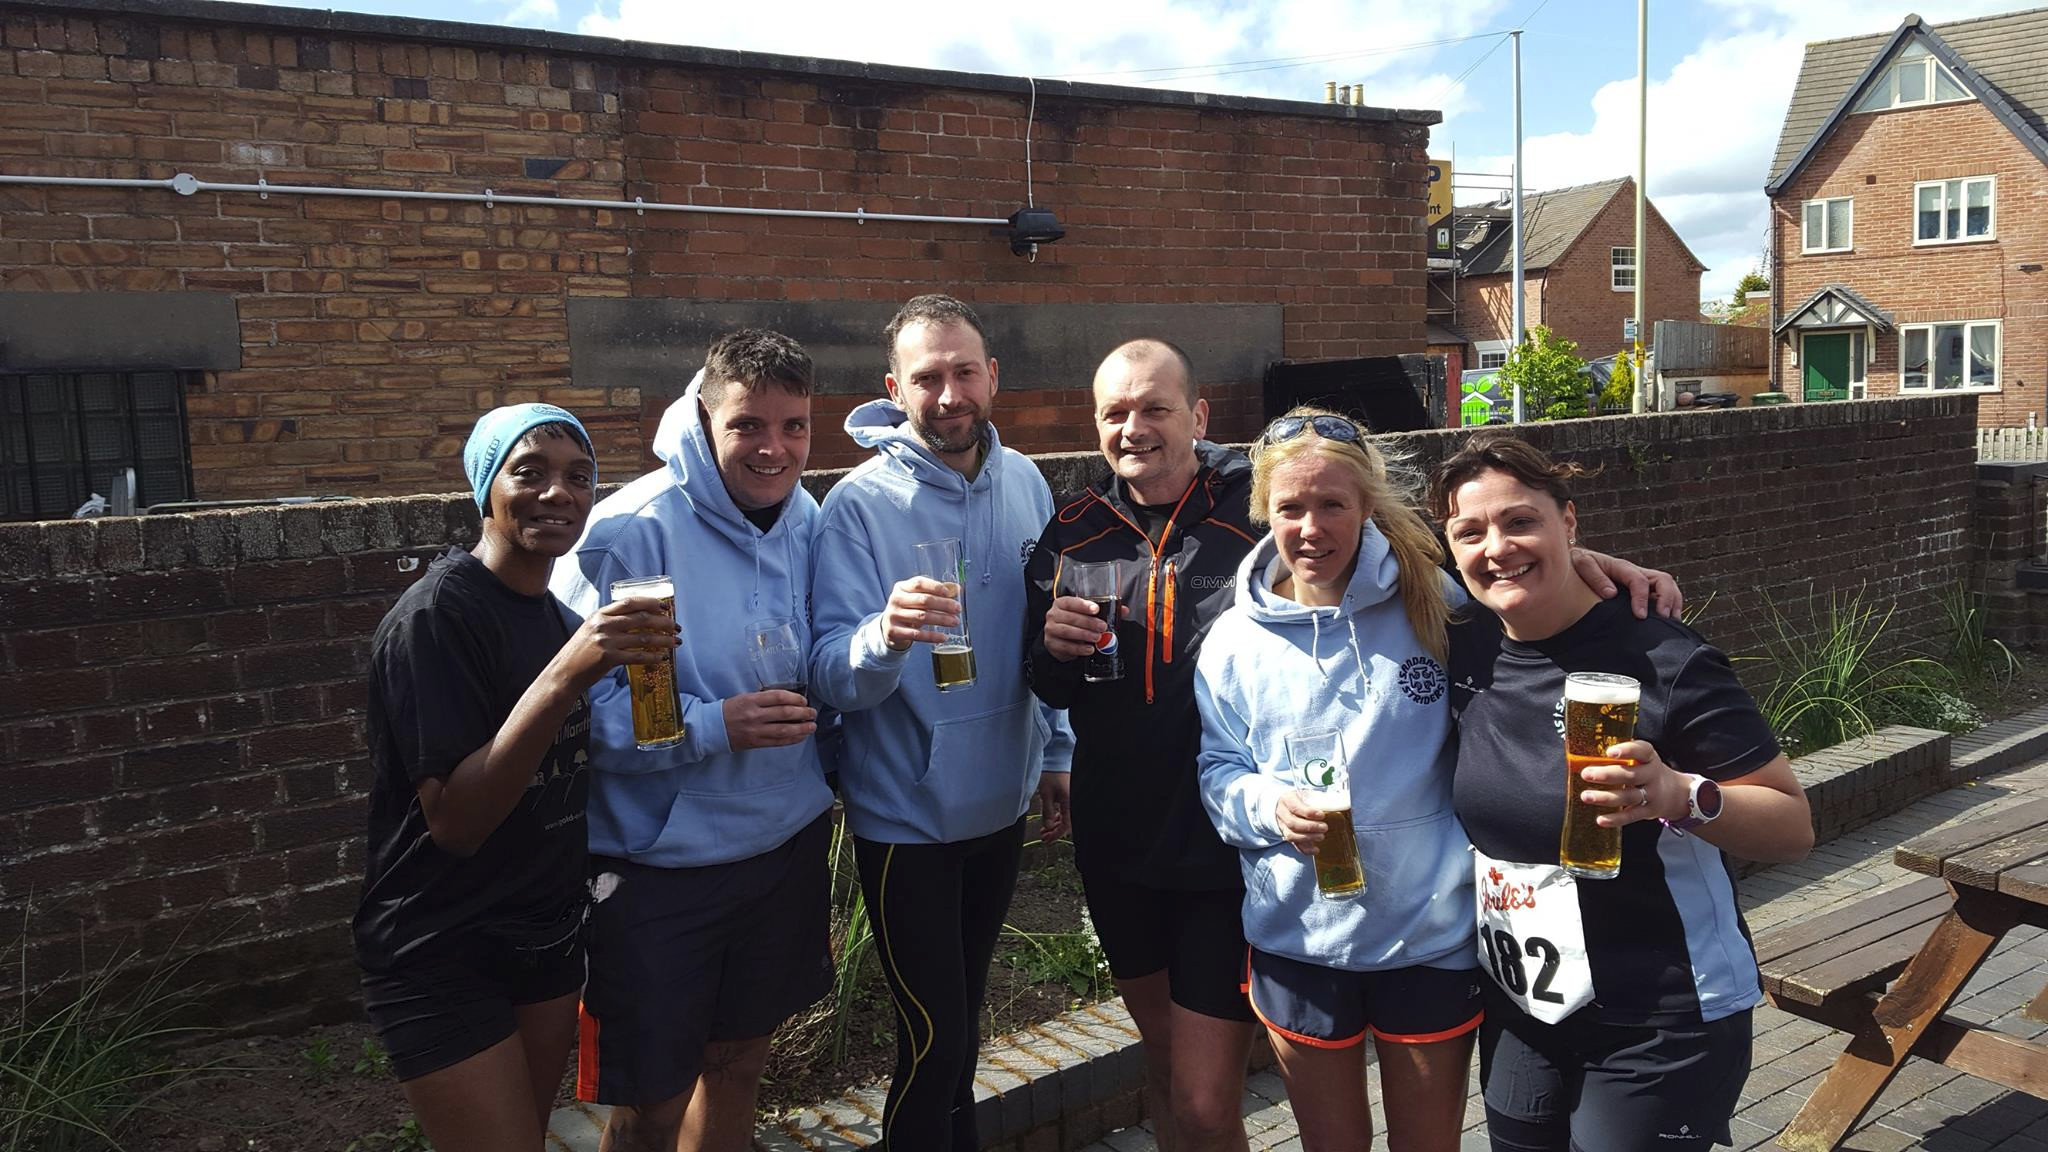 June Wray, Chris Holden, Jan Peake, Paul Nicholls, Jayne Pyatt and Katie Payne enjoying a pint after the Newcastle Way Marathon